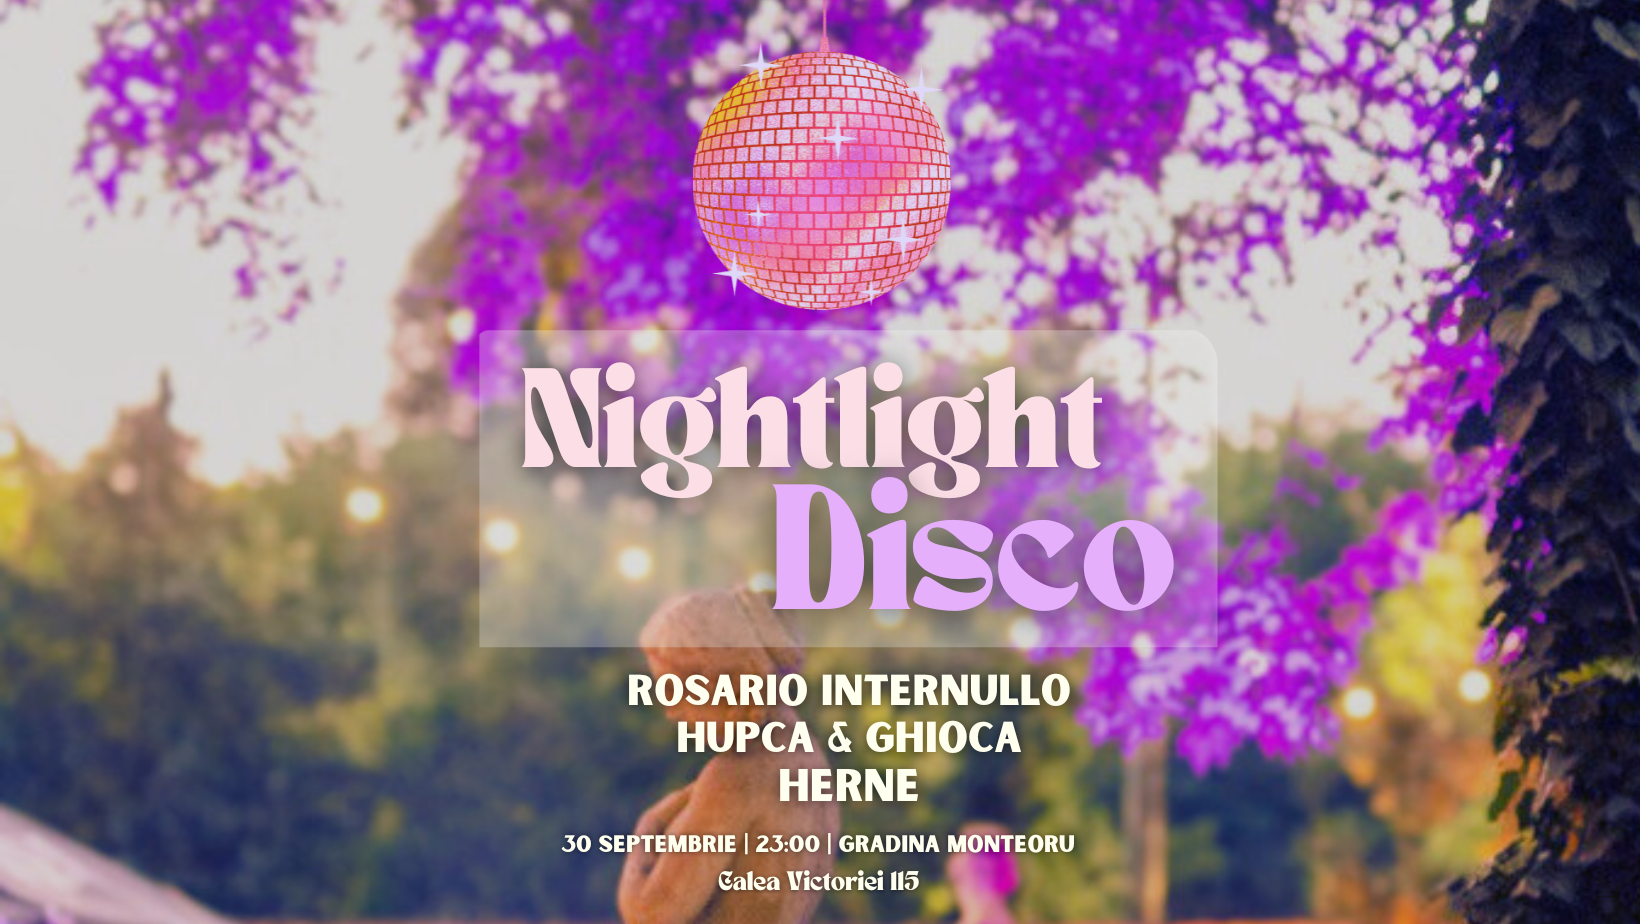 Nightlight Disco with Rosario Internullo, Hupca & Ghioca, Herne - フライヤー表